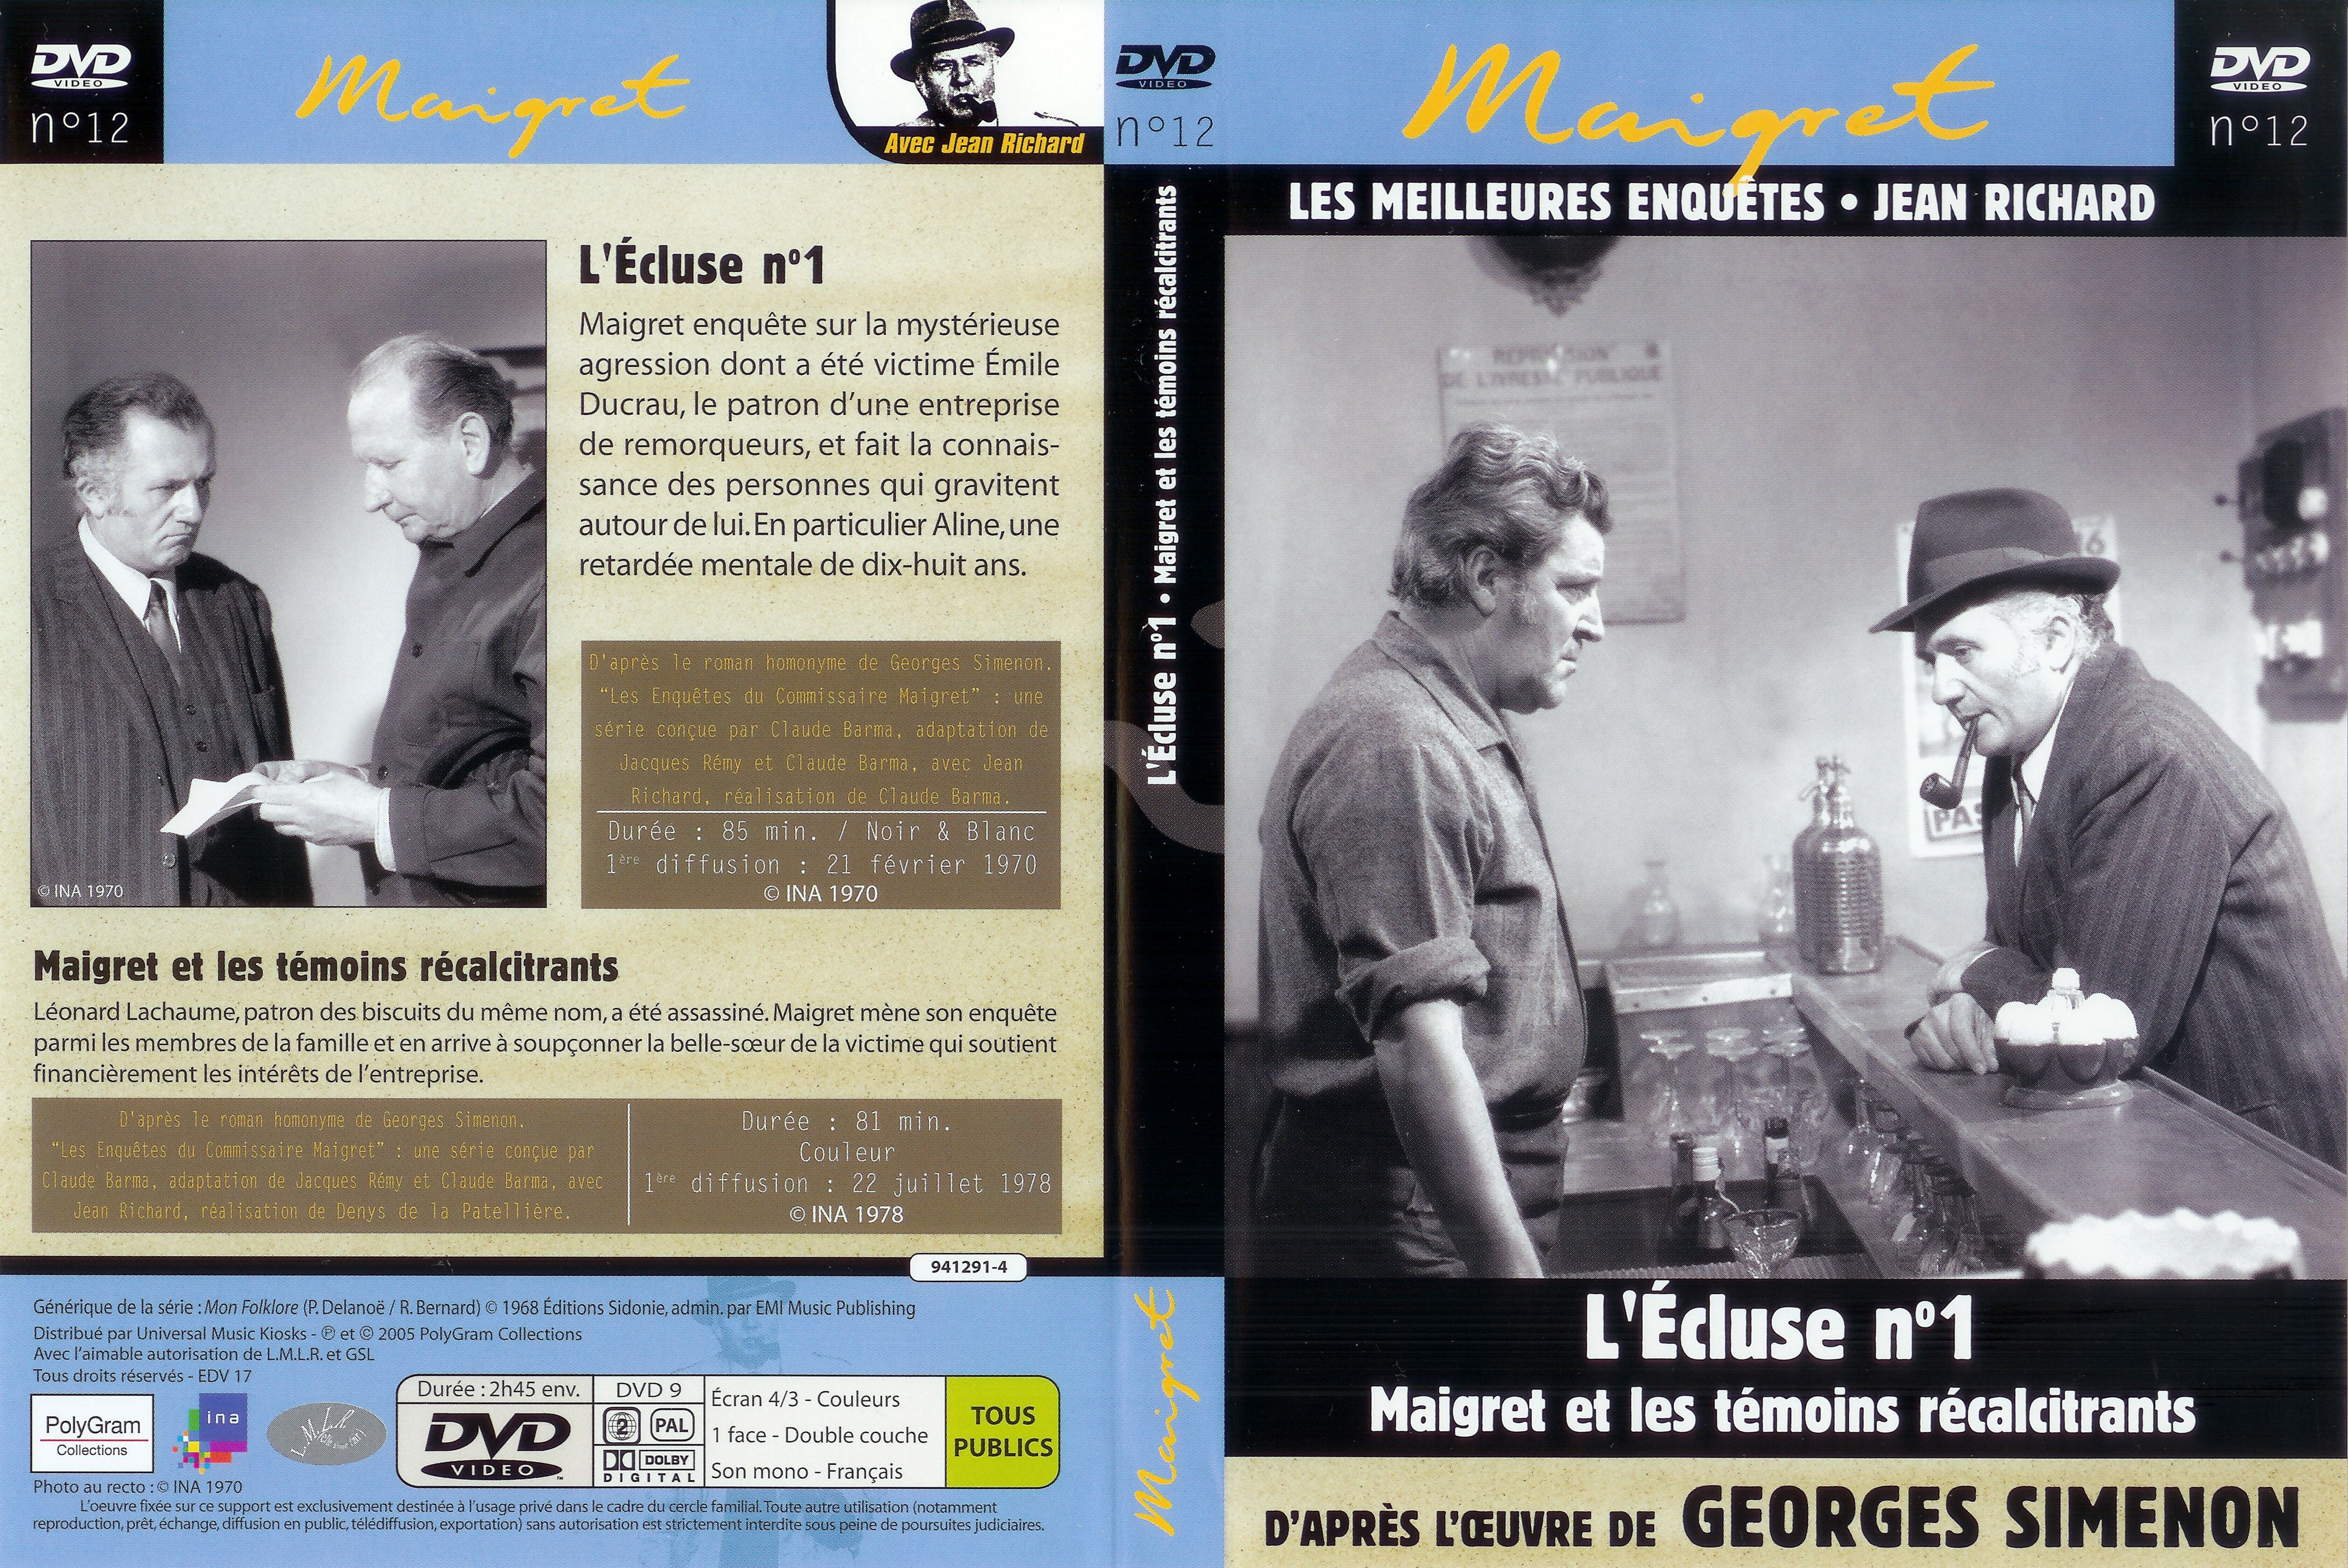 Jaquette DVD Maigret (Jean Richard) vol 12